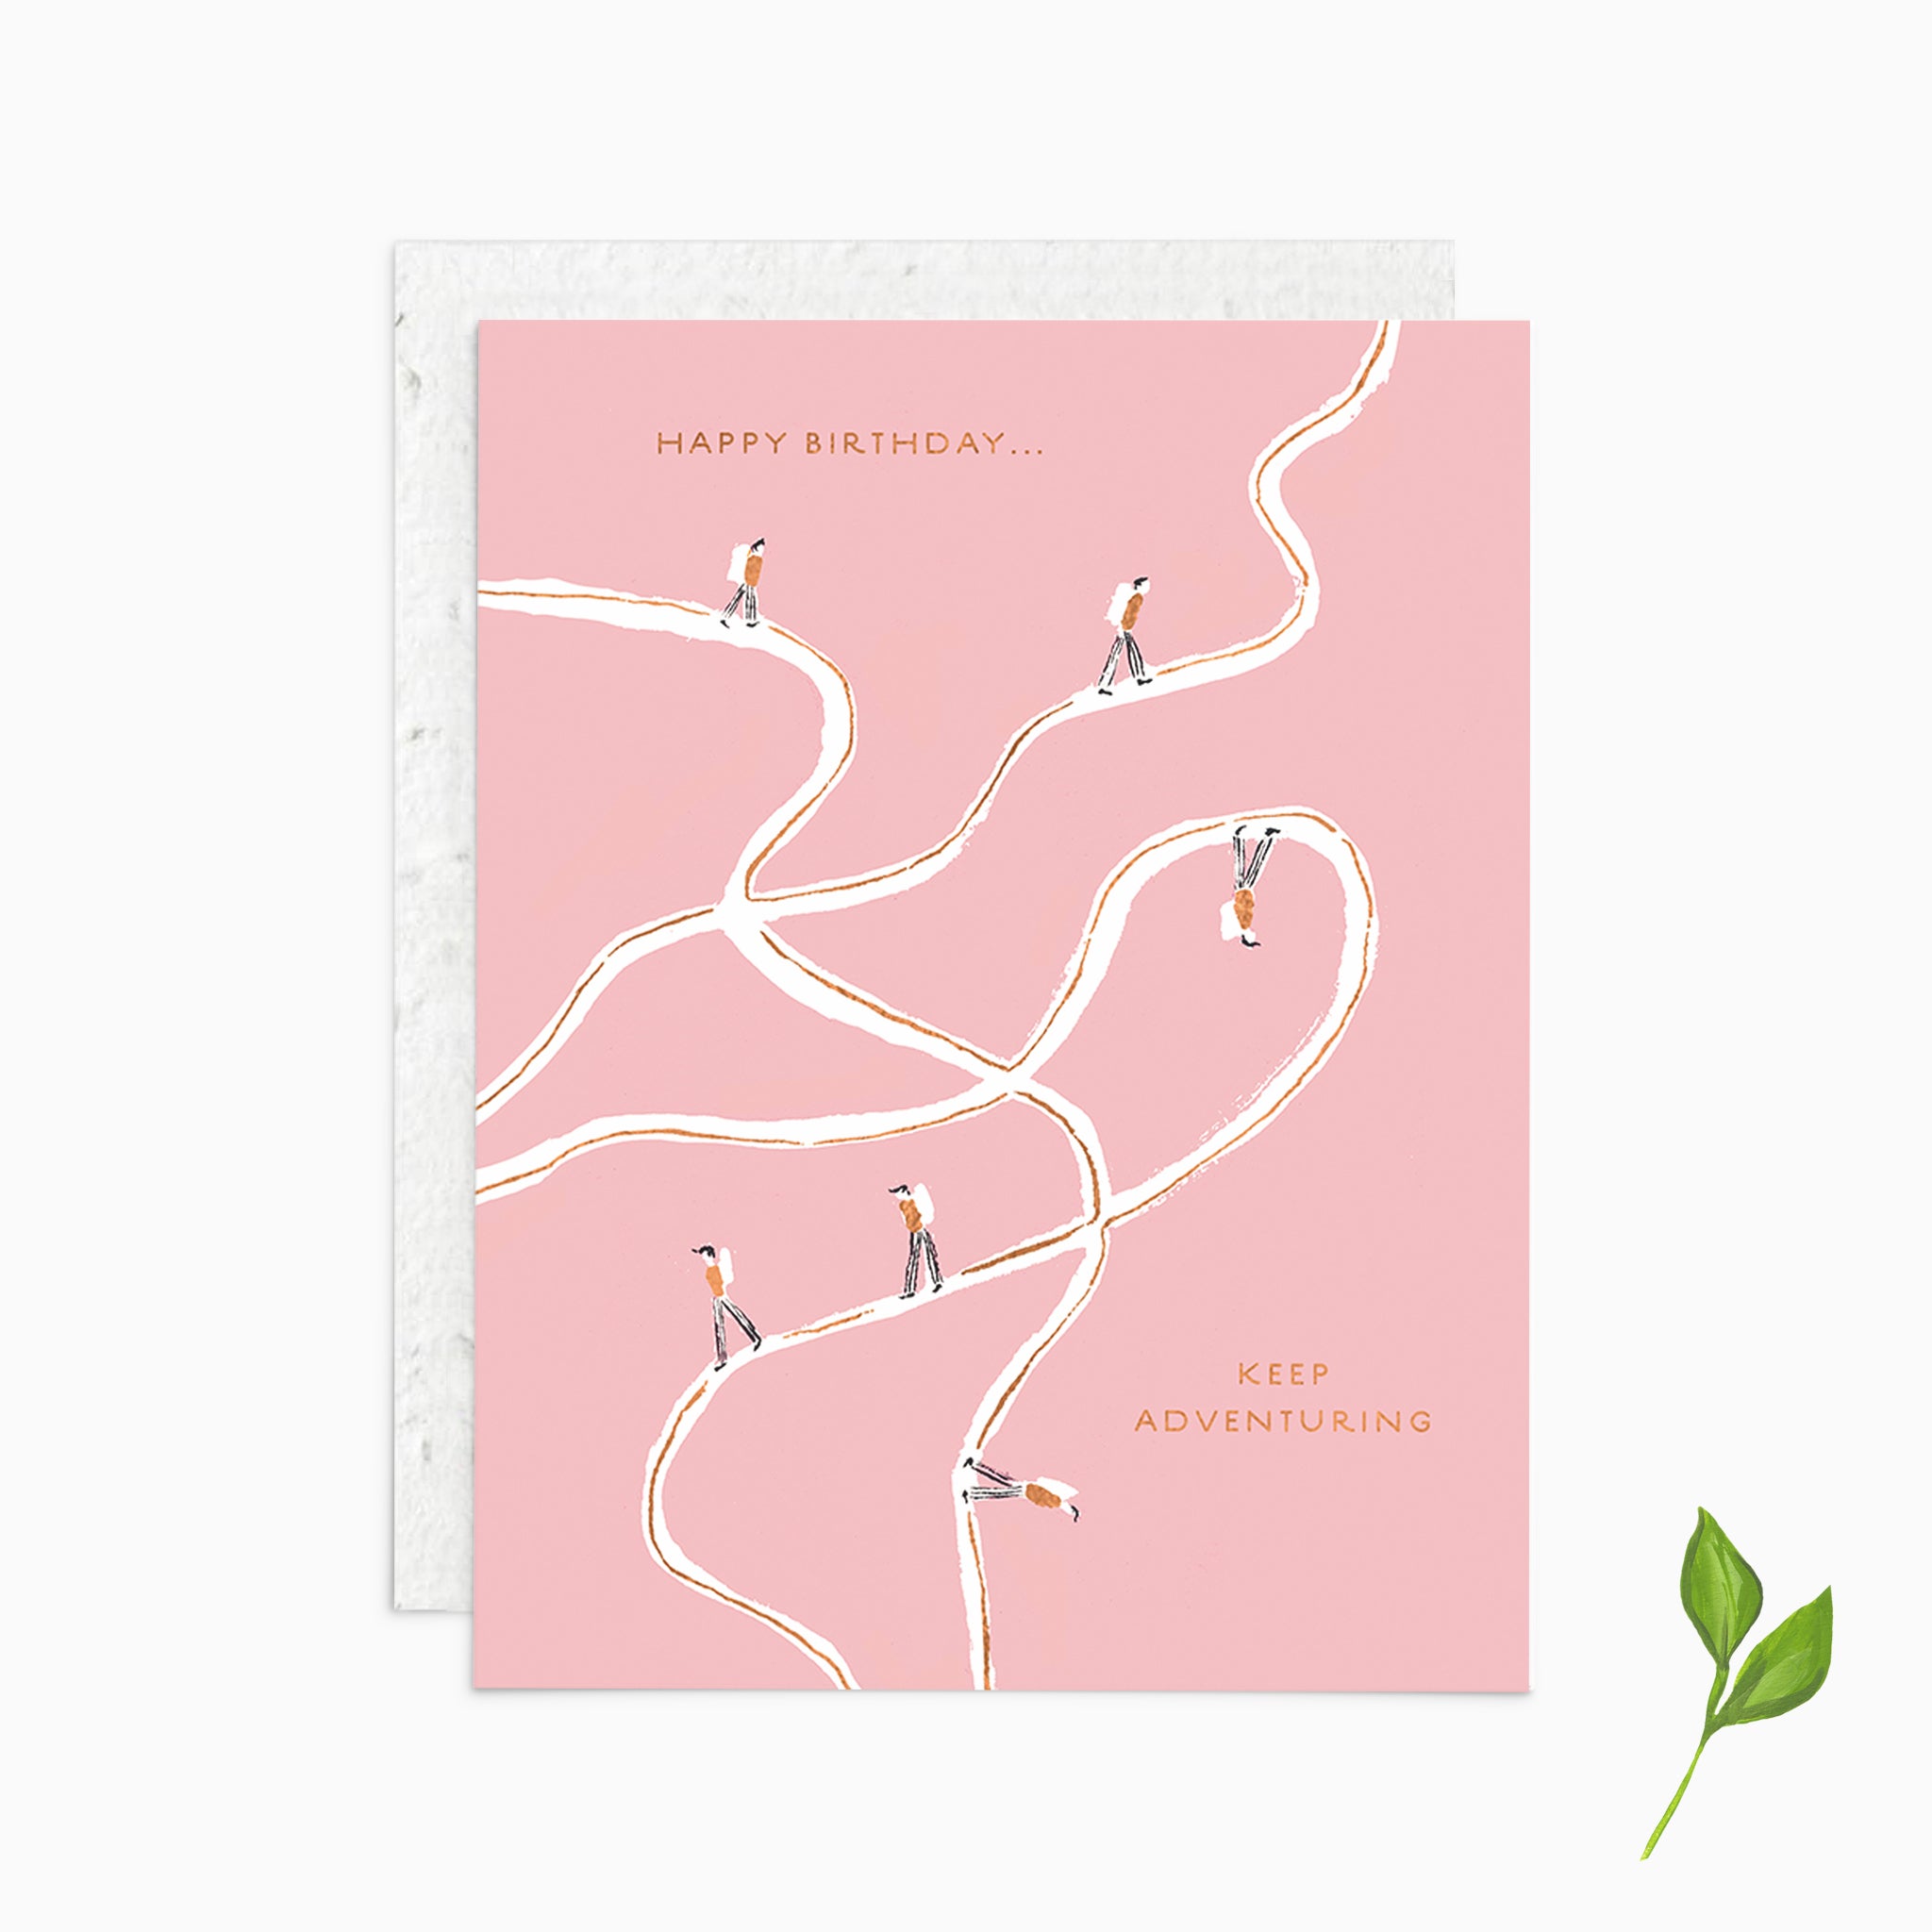 Happy Birthday, Keep Adventuring - Plantable Card